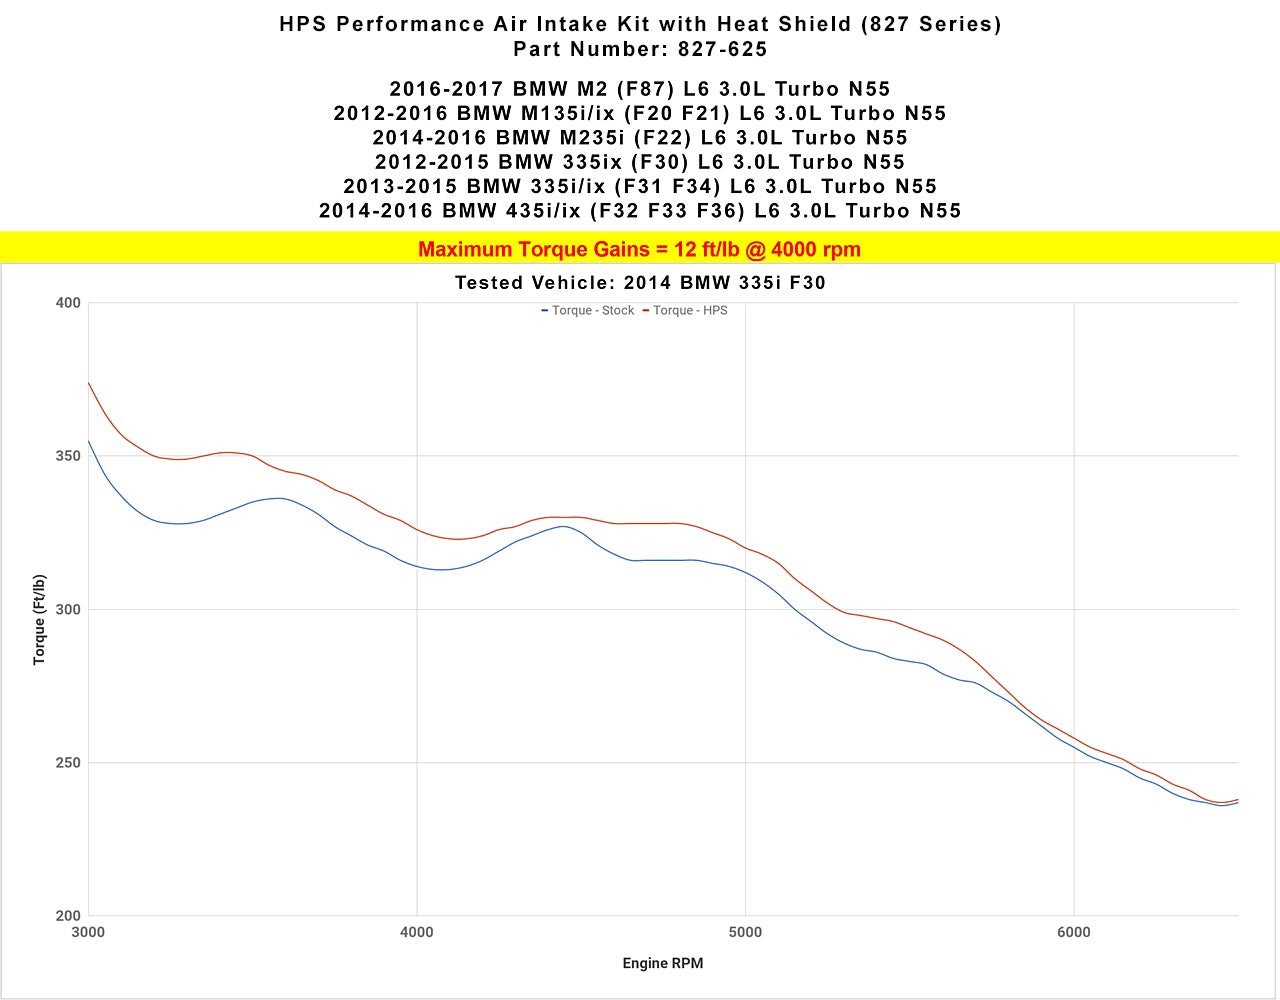 Dyno proven gains 12 ft/lb HPS Performance Shortram Air Intake Kit 2012-2015 BMW 335ix F30 3.0L Turbo N55 827-625P